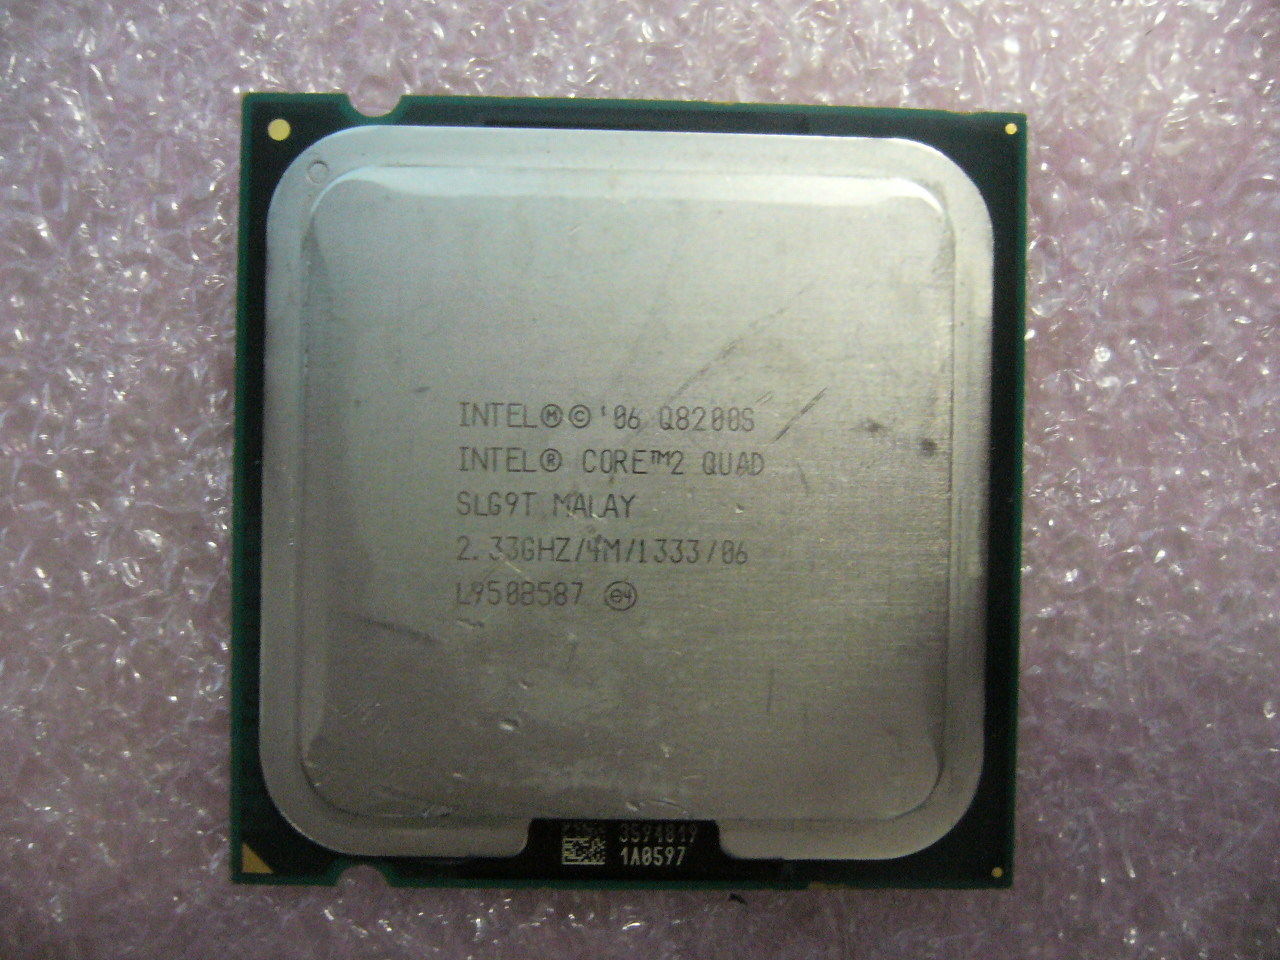 QTY 1x INTEL Quad Cores Q8200S CPU 2.33GHz/4MB/1333Mhz LGA775 SLG9T 65W